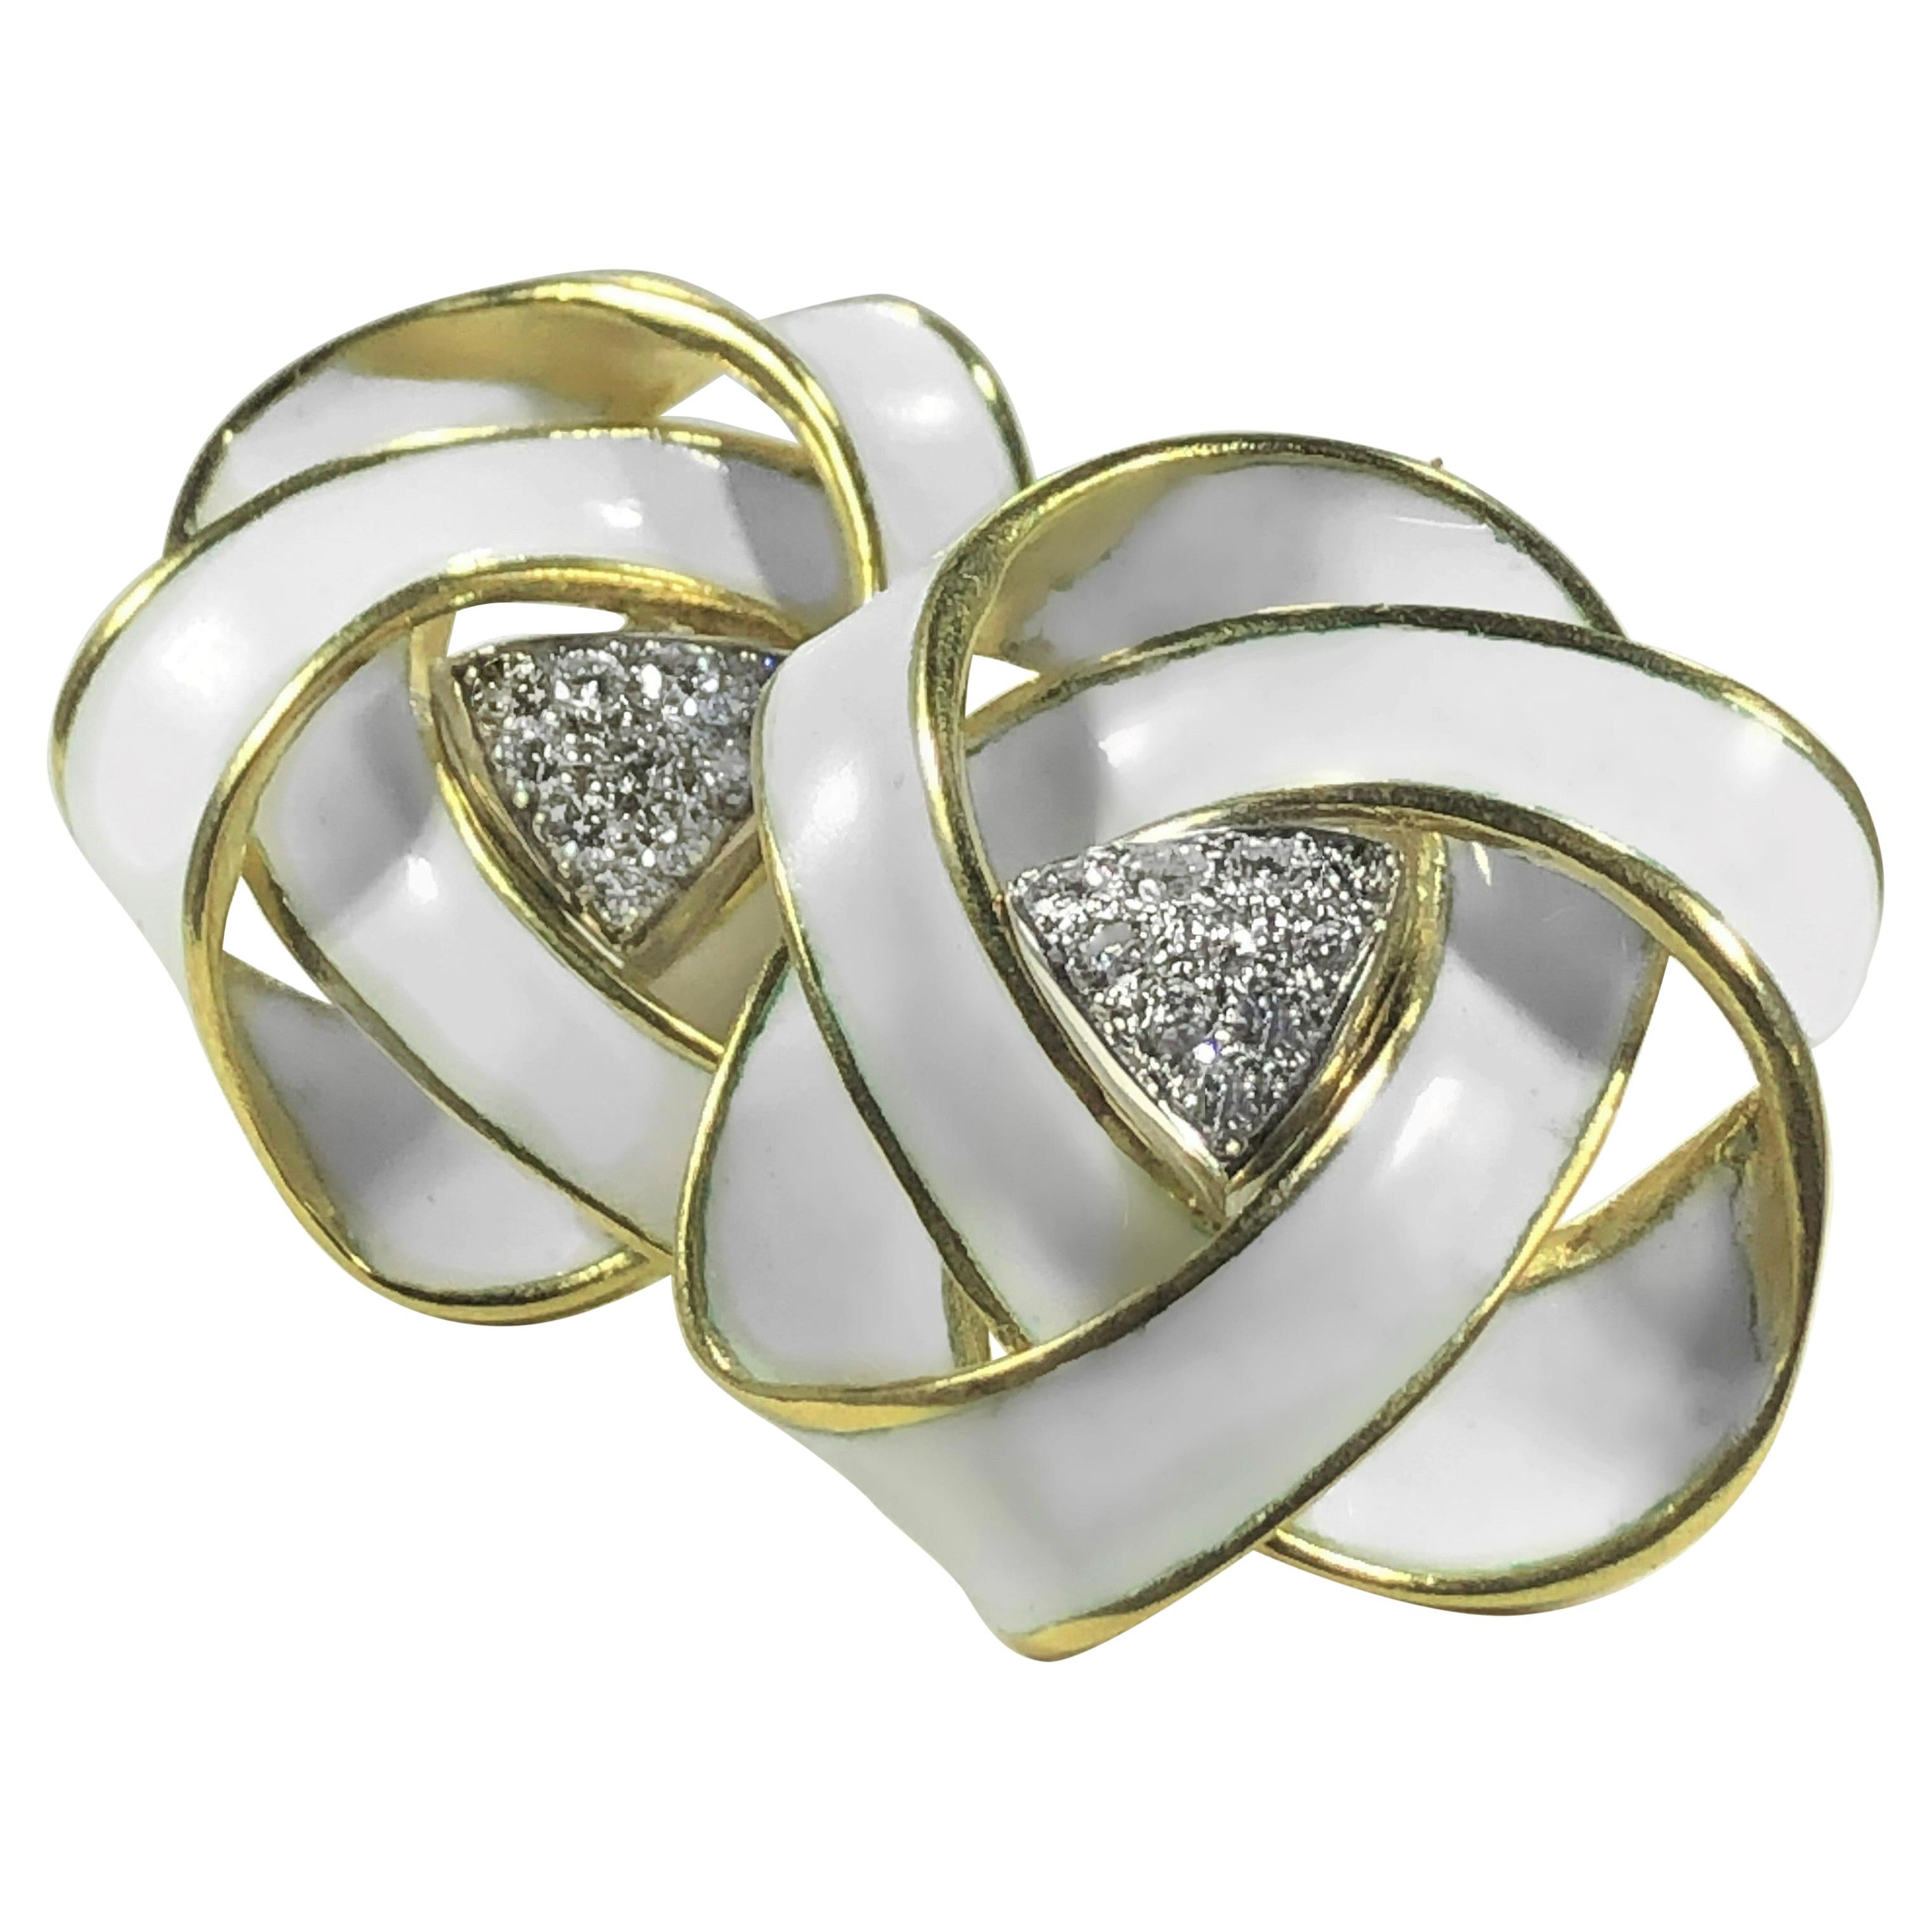 Boris LeBeau Yellow Gold & White Enamel Large Knot Earrings with Diamond Centers